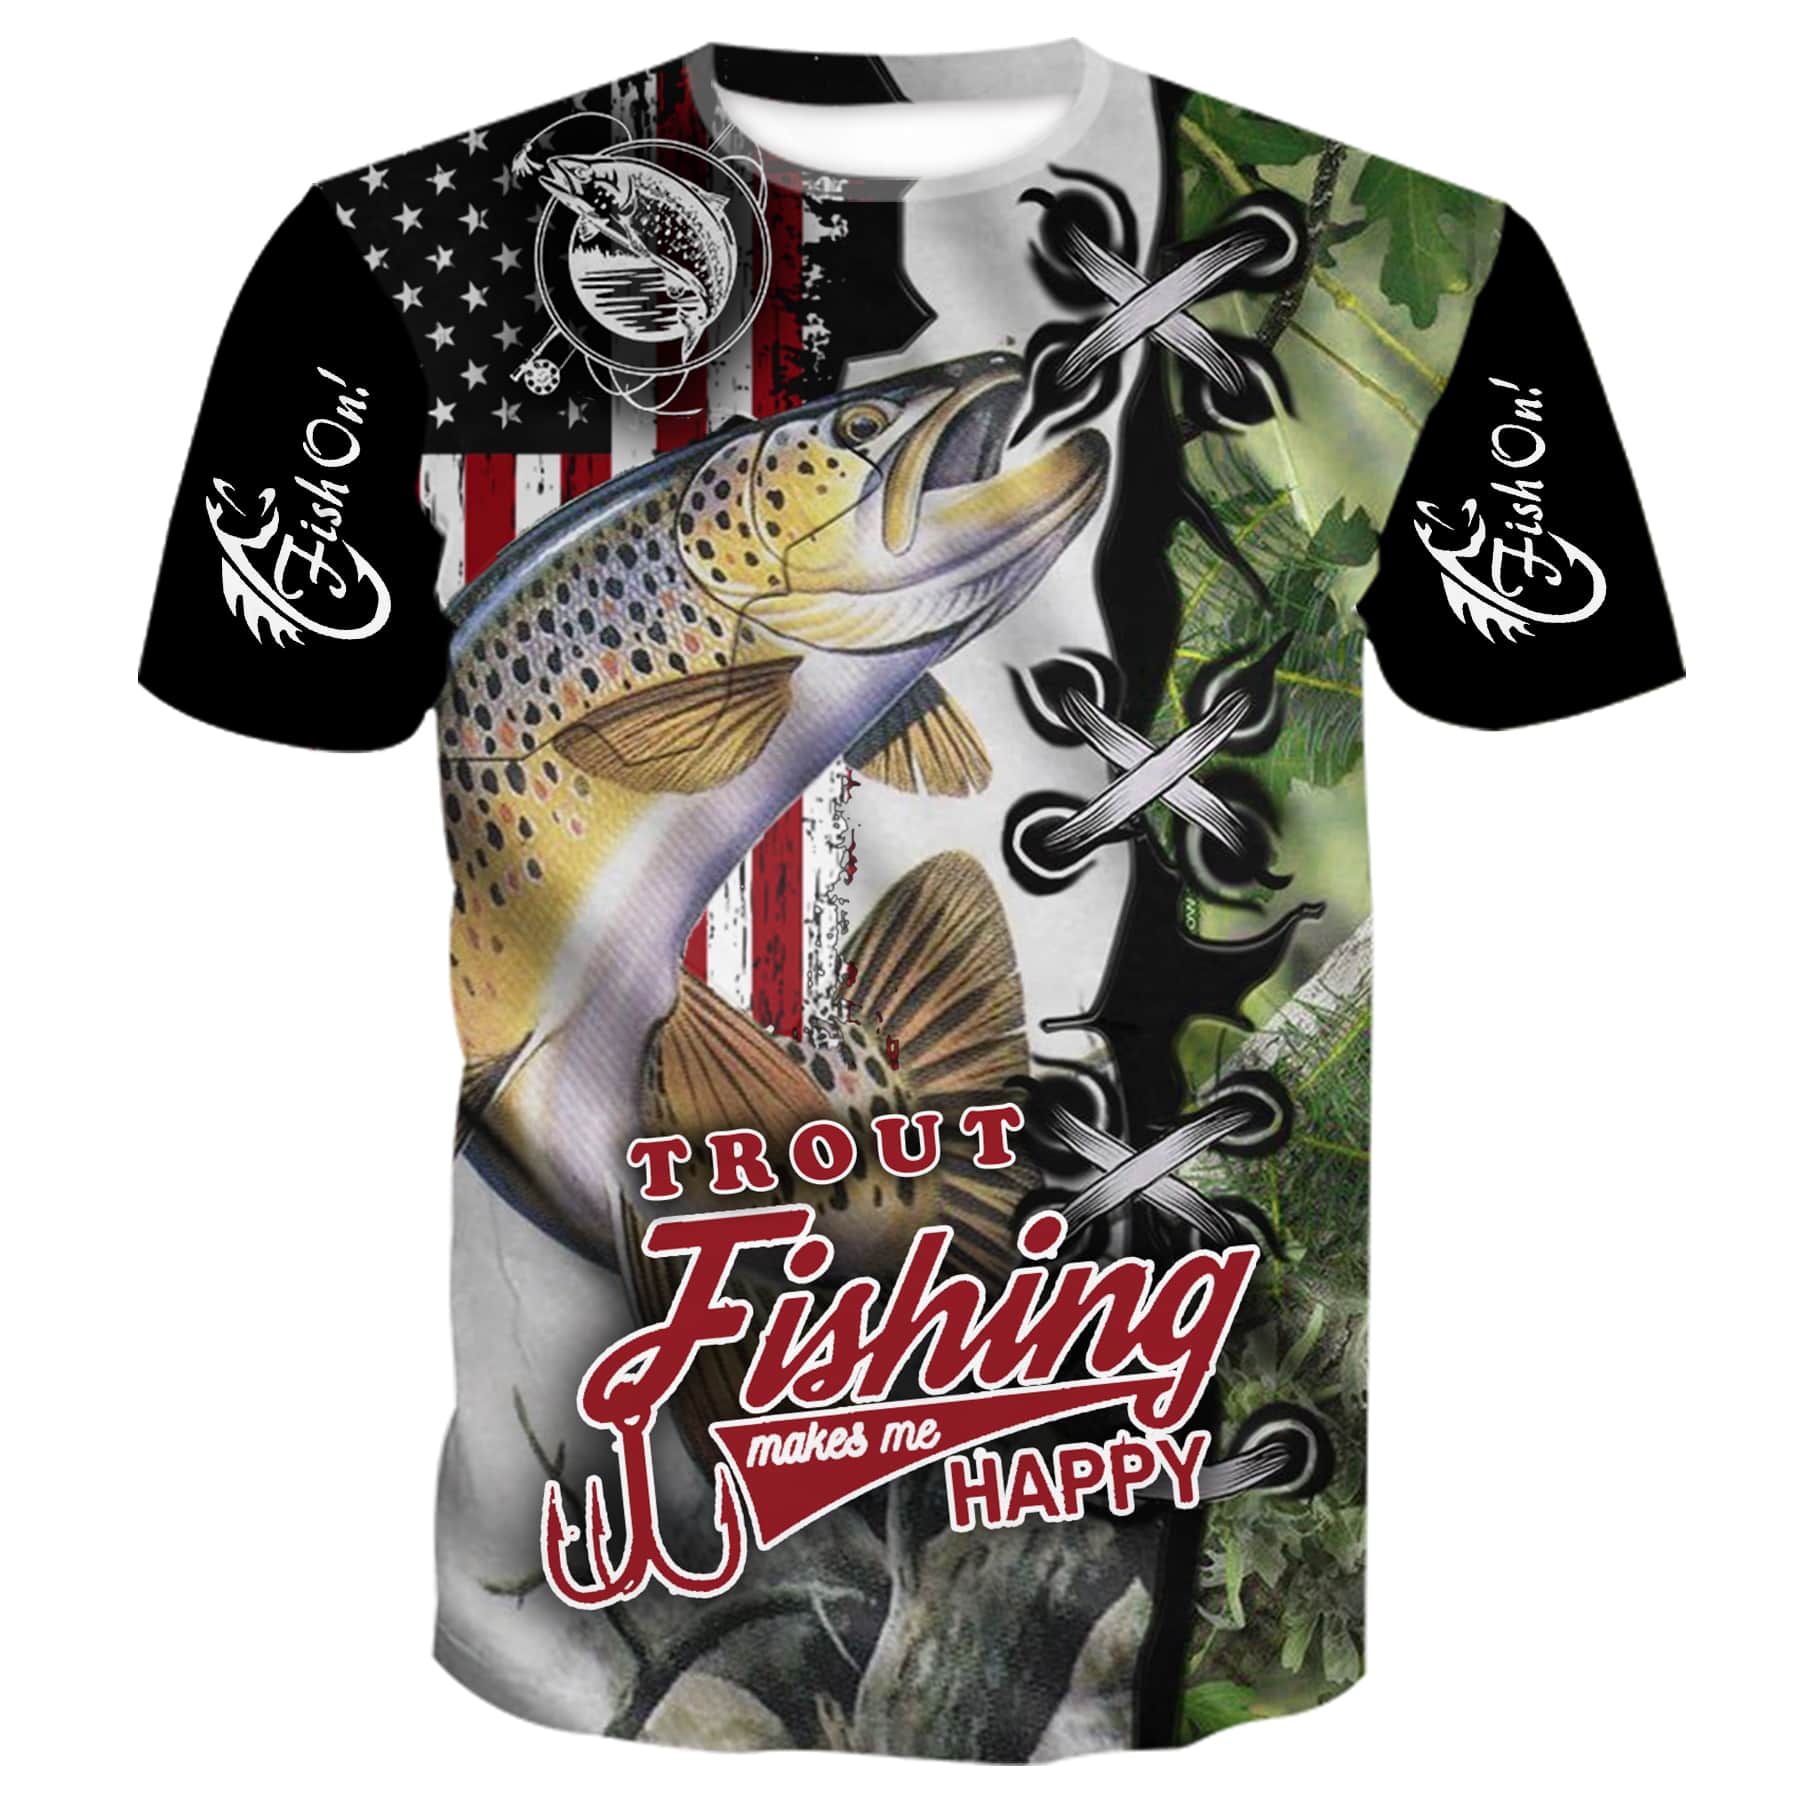 Trout Fishing Makes Me Happy - Kid's T-Shirt, Youth Medium (10)